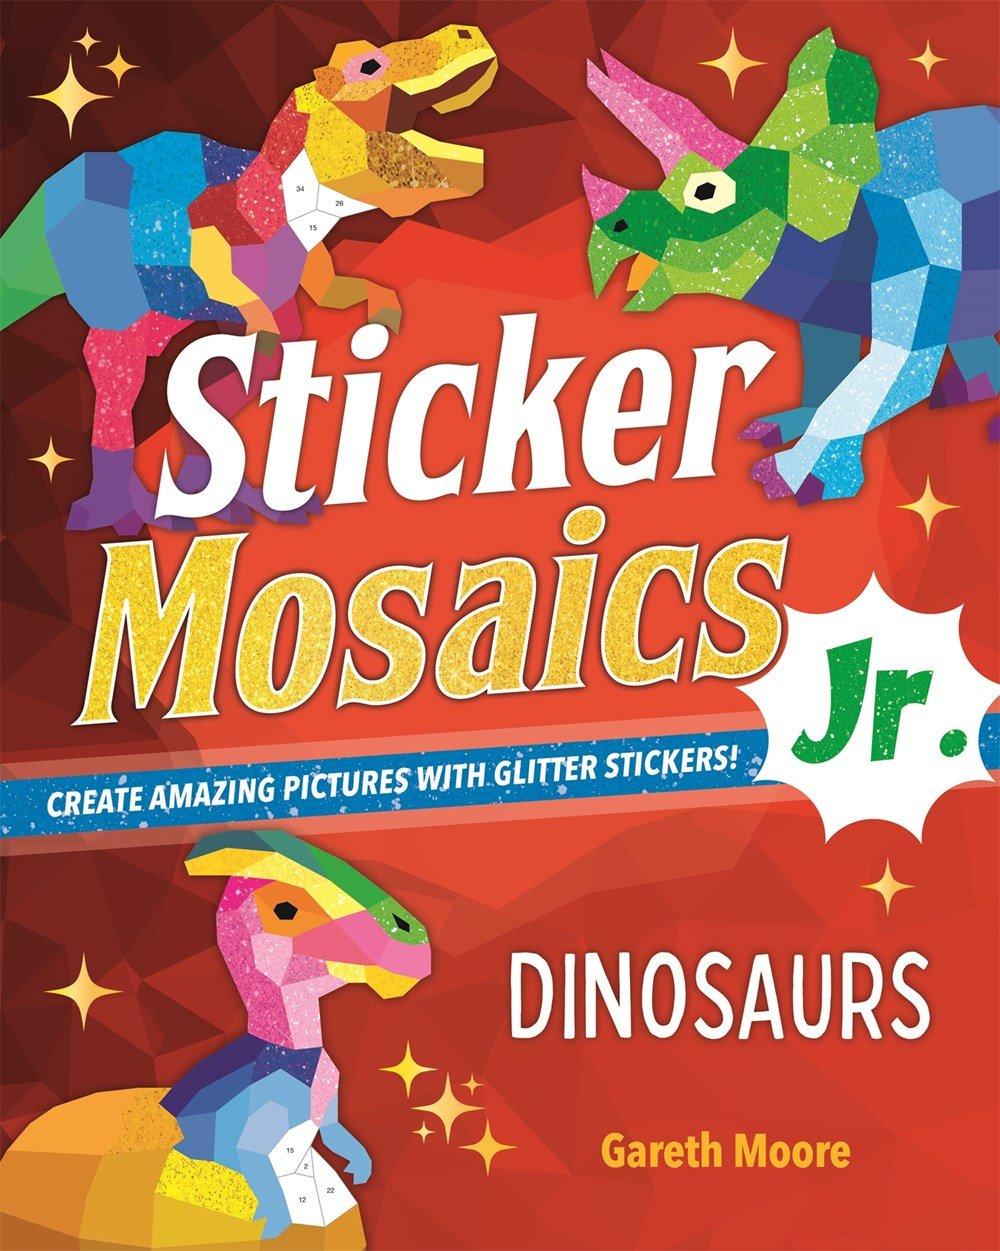 Sticker Mosaics Jr.